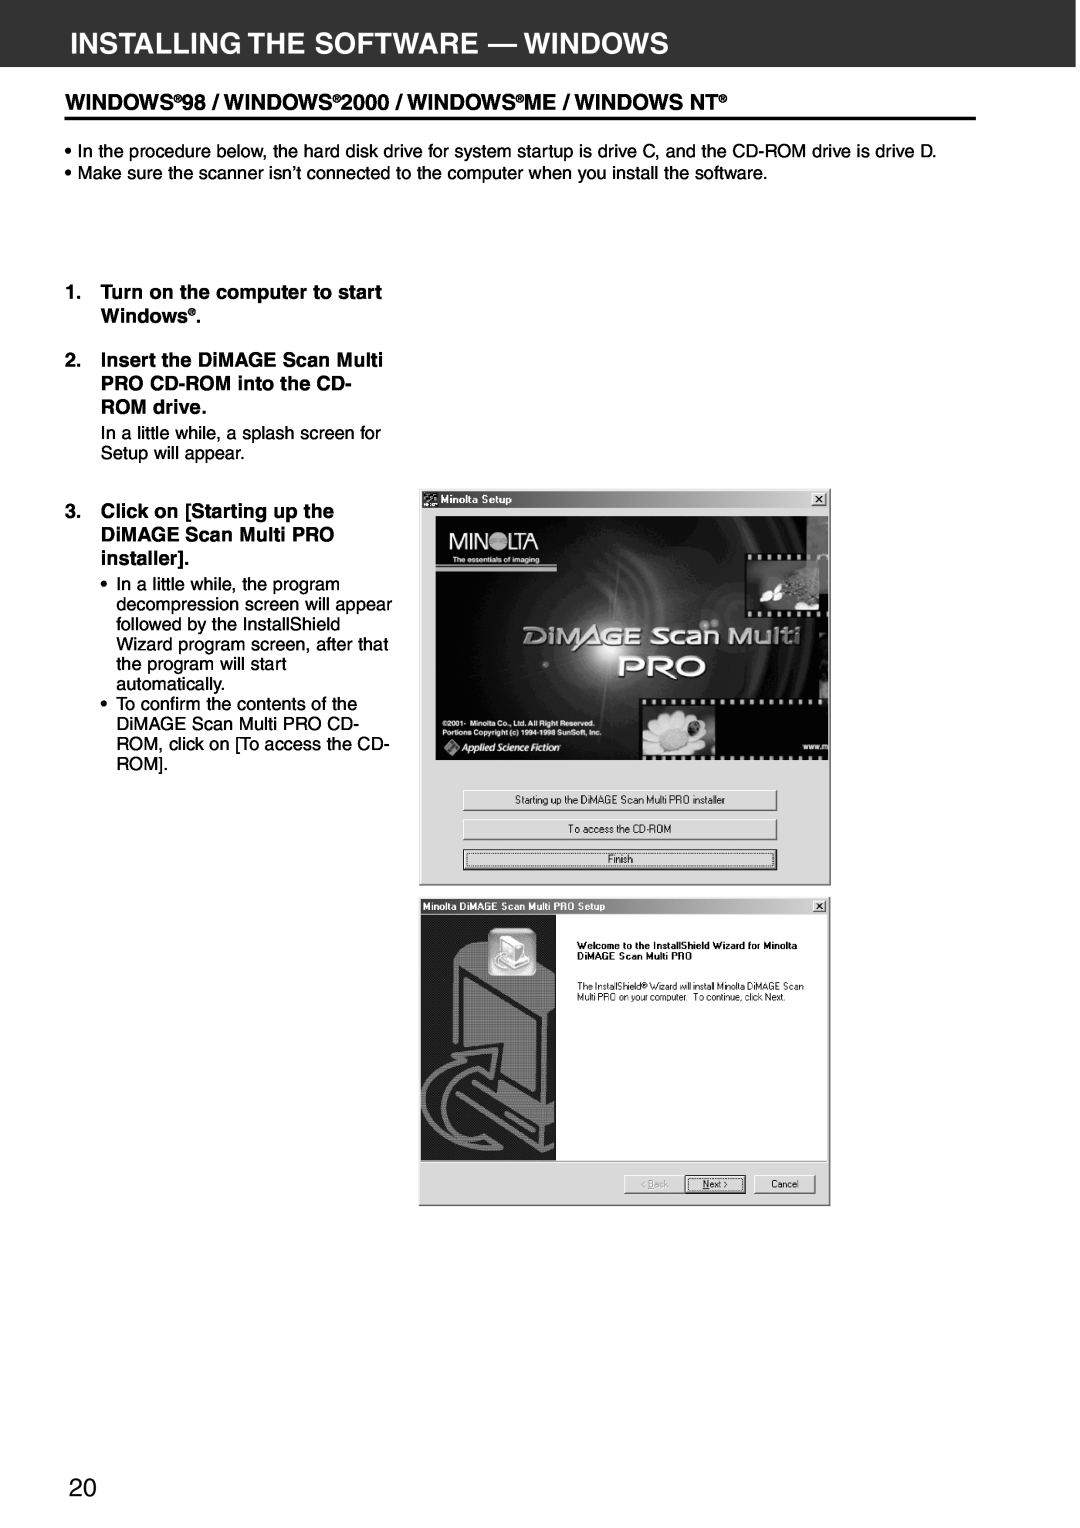 Konica Minolta Scan Multi PRO Installing The Software - Windows, WINDOWS98 / WINDOWS2000 / WINDOWSME / WINDOWS NT 